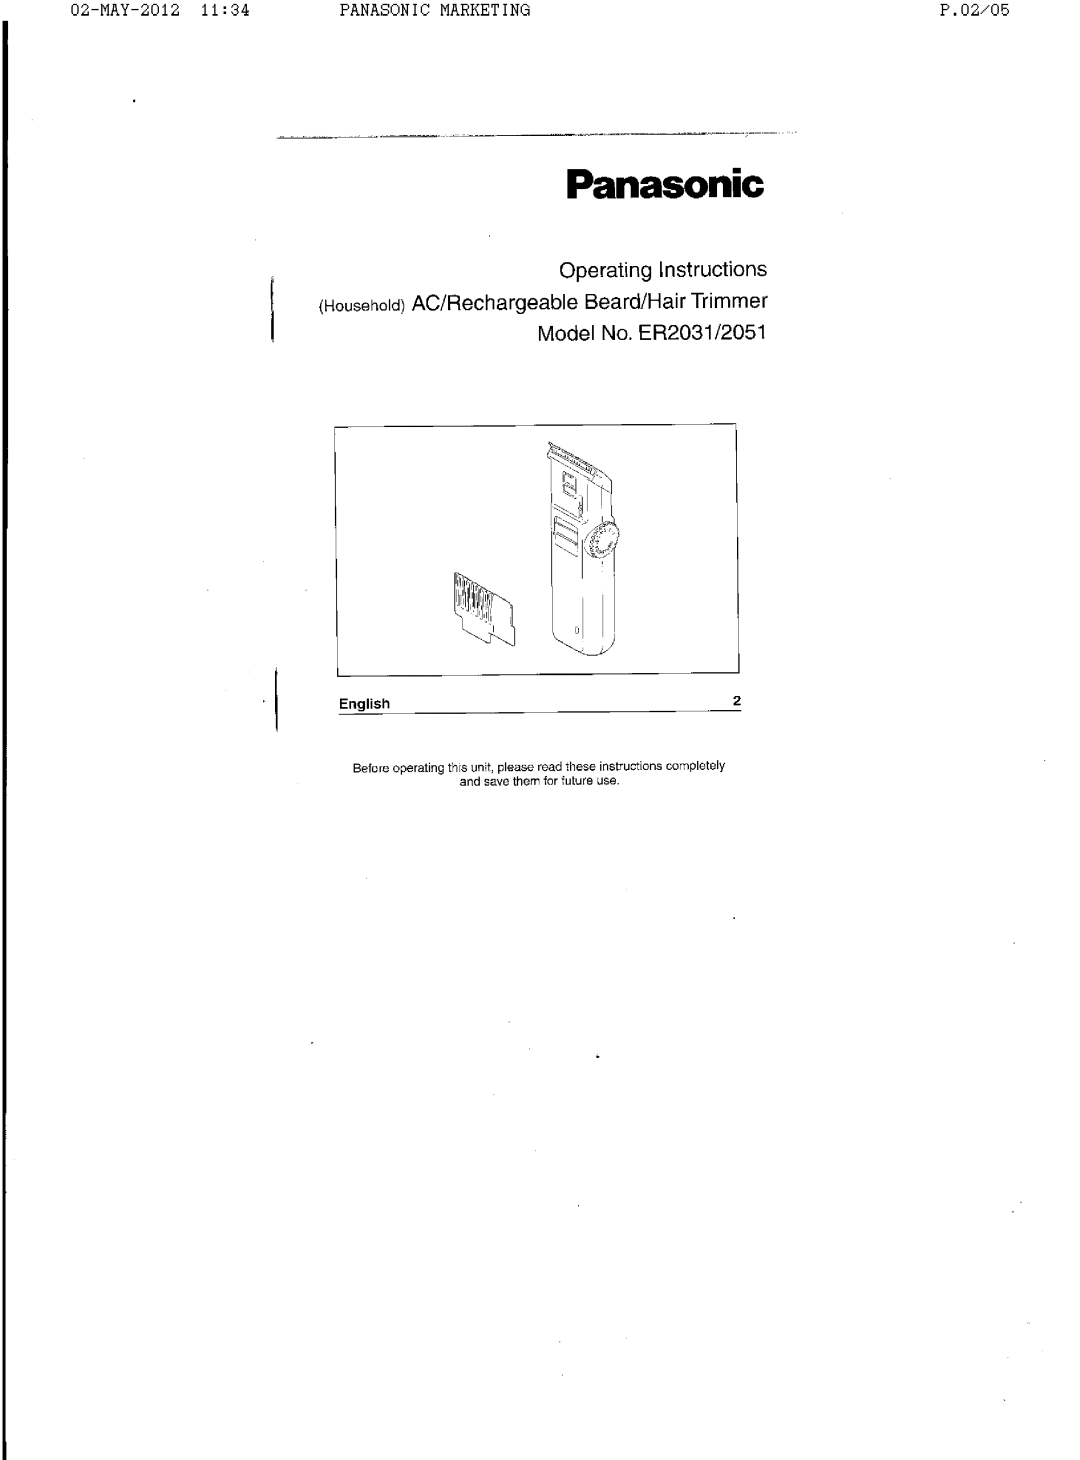 Panasonic ER2031/2051 manual 